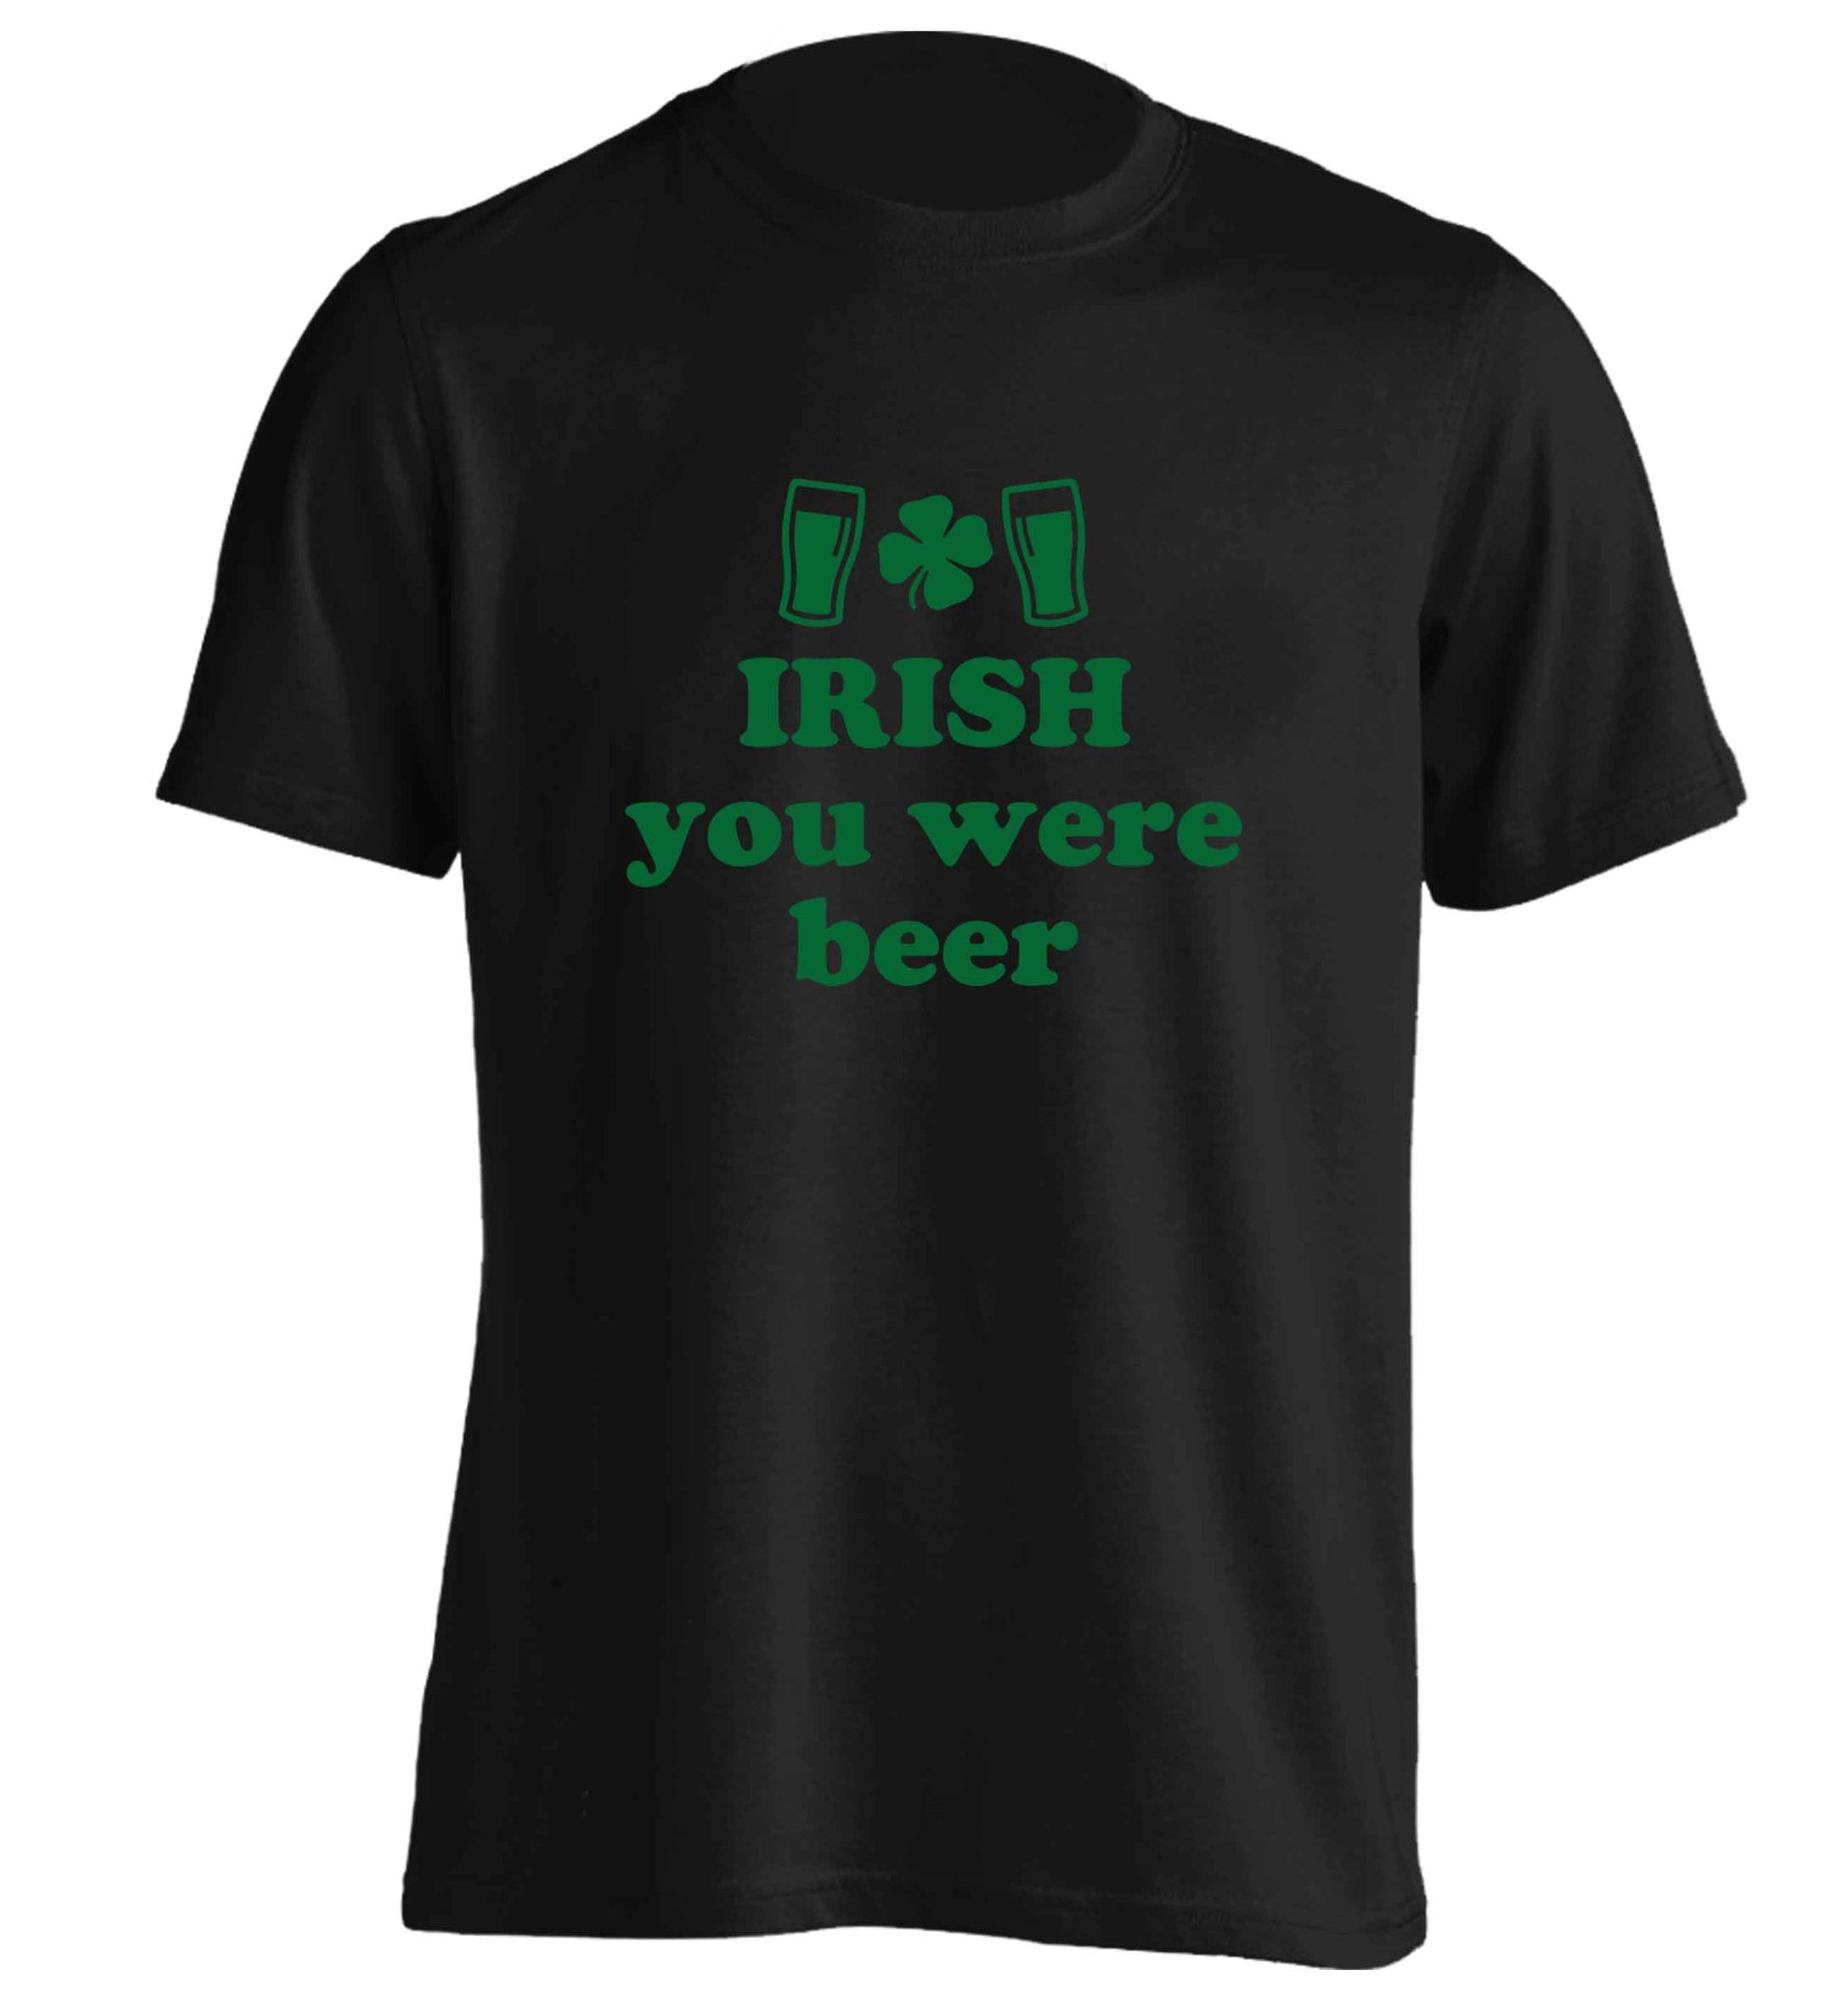 Irish you were beer adults unisex black Tshirt 2XL